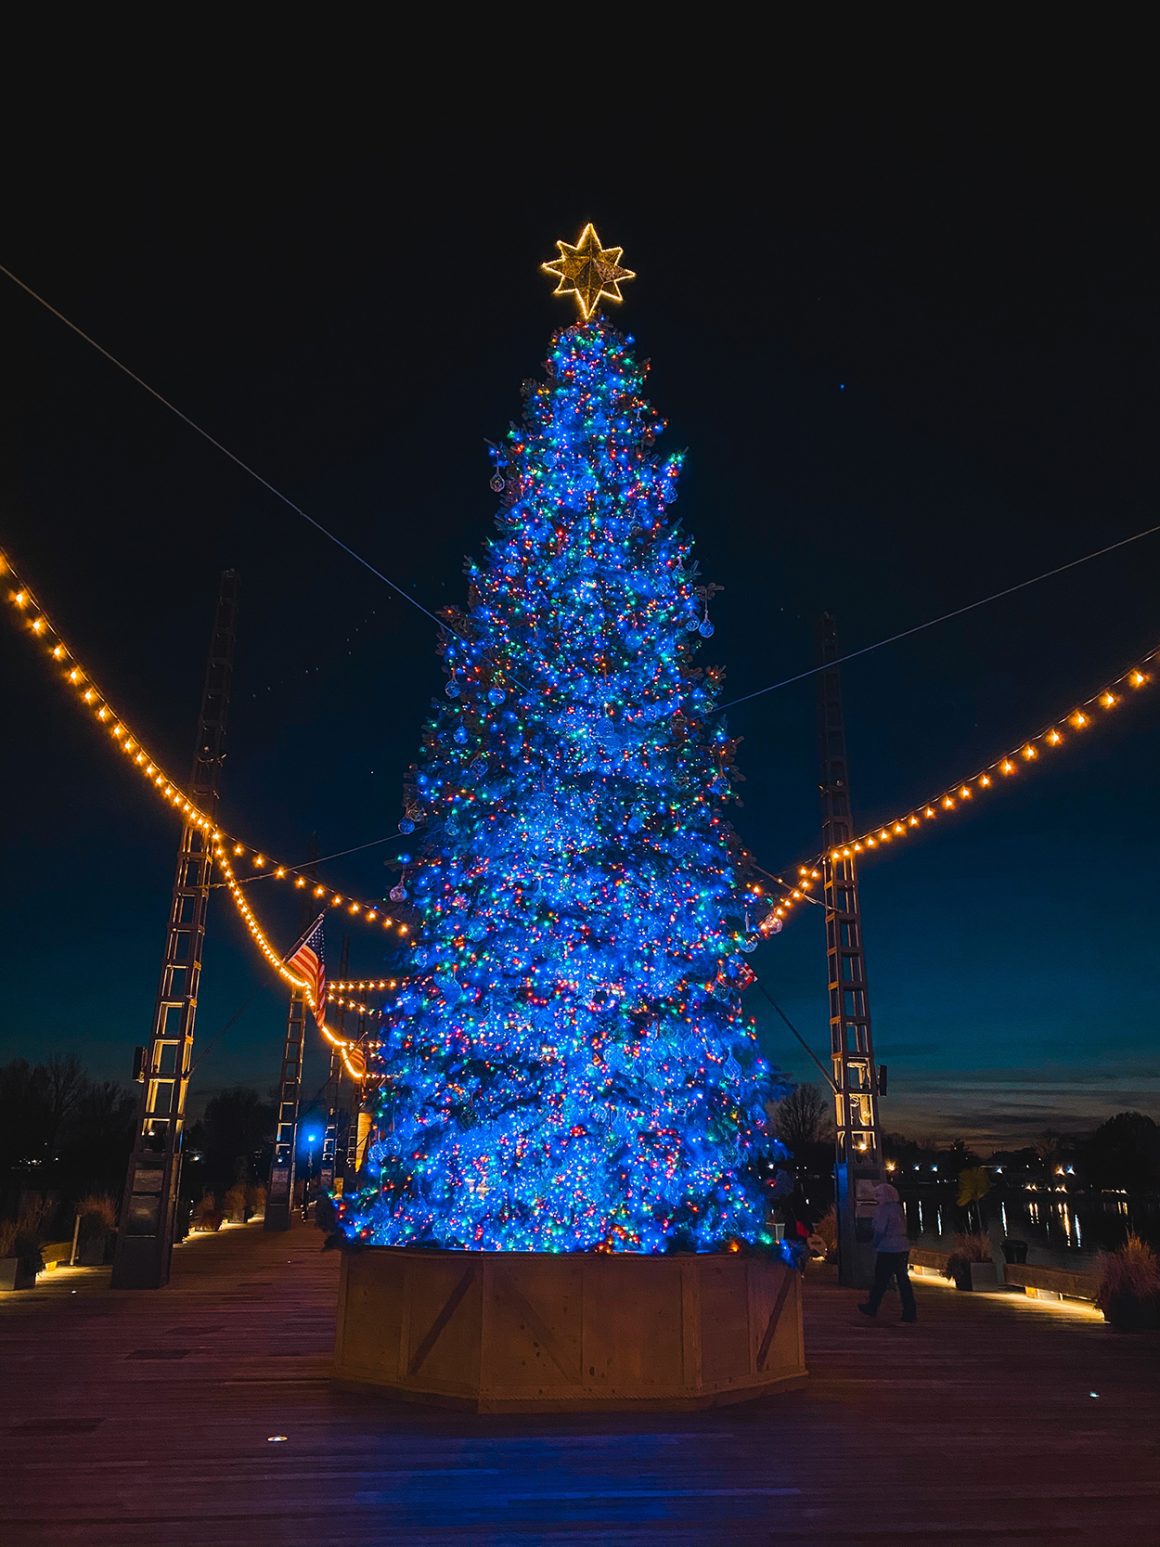 The Wharf Christmas Tree in Washington DC